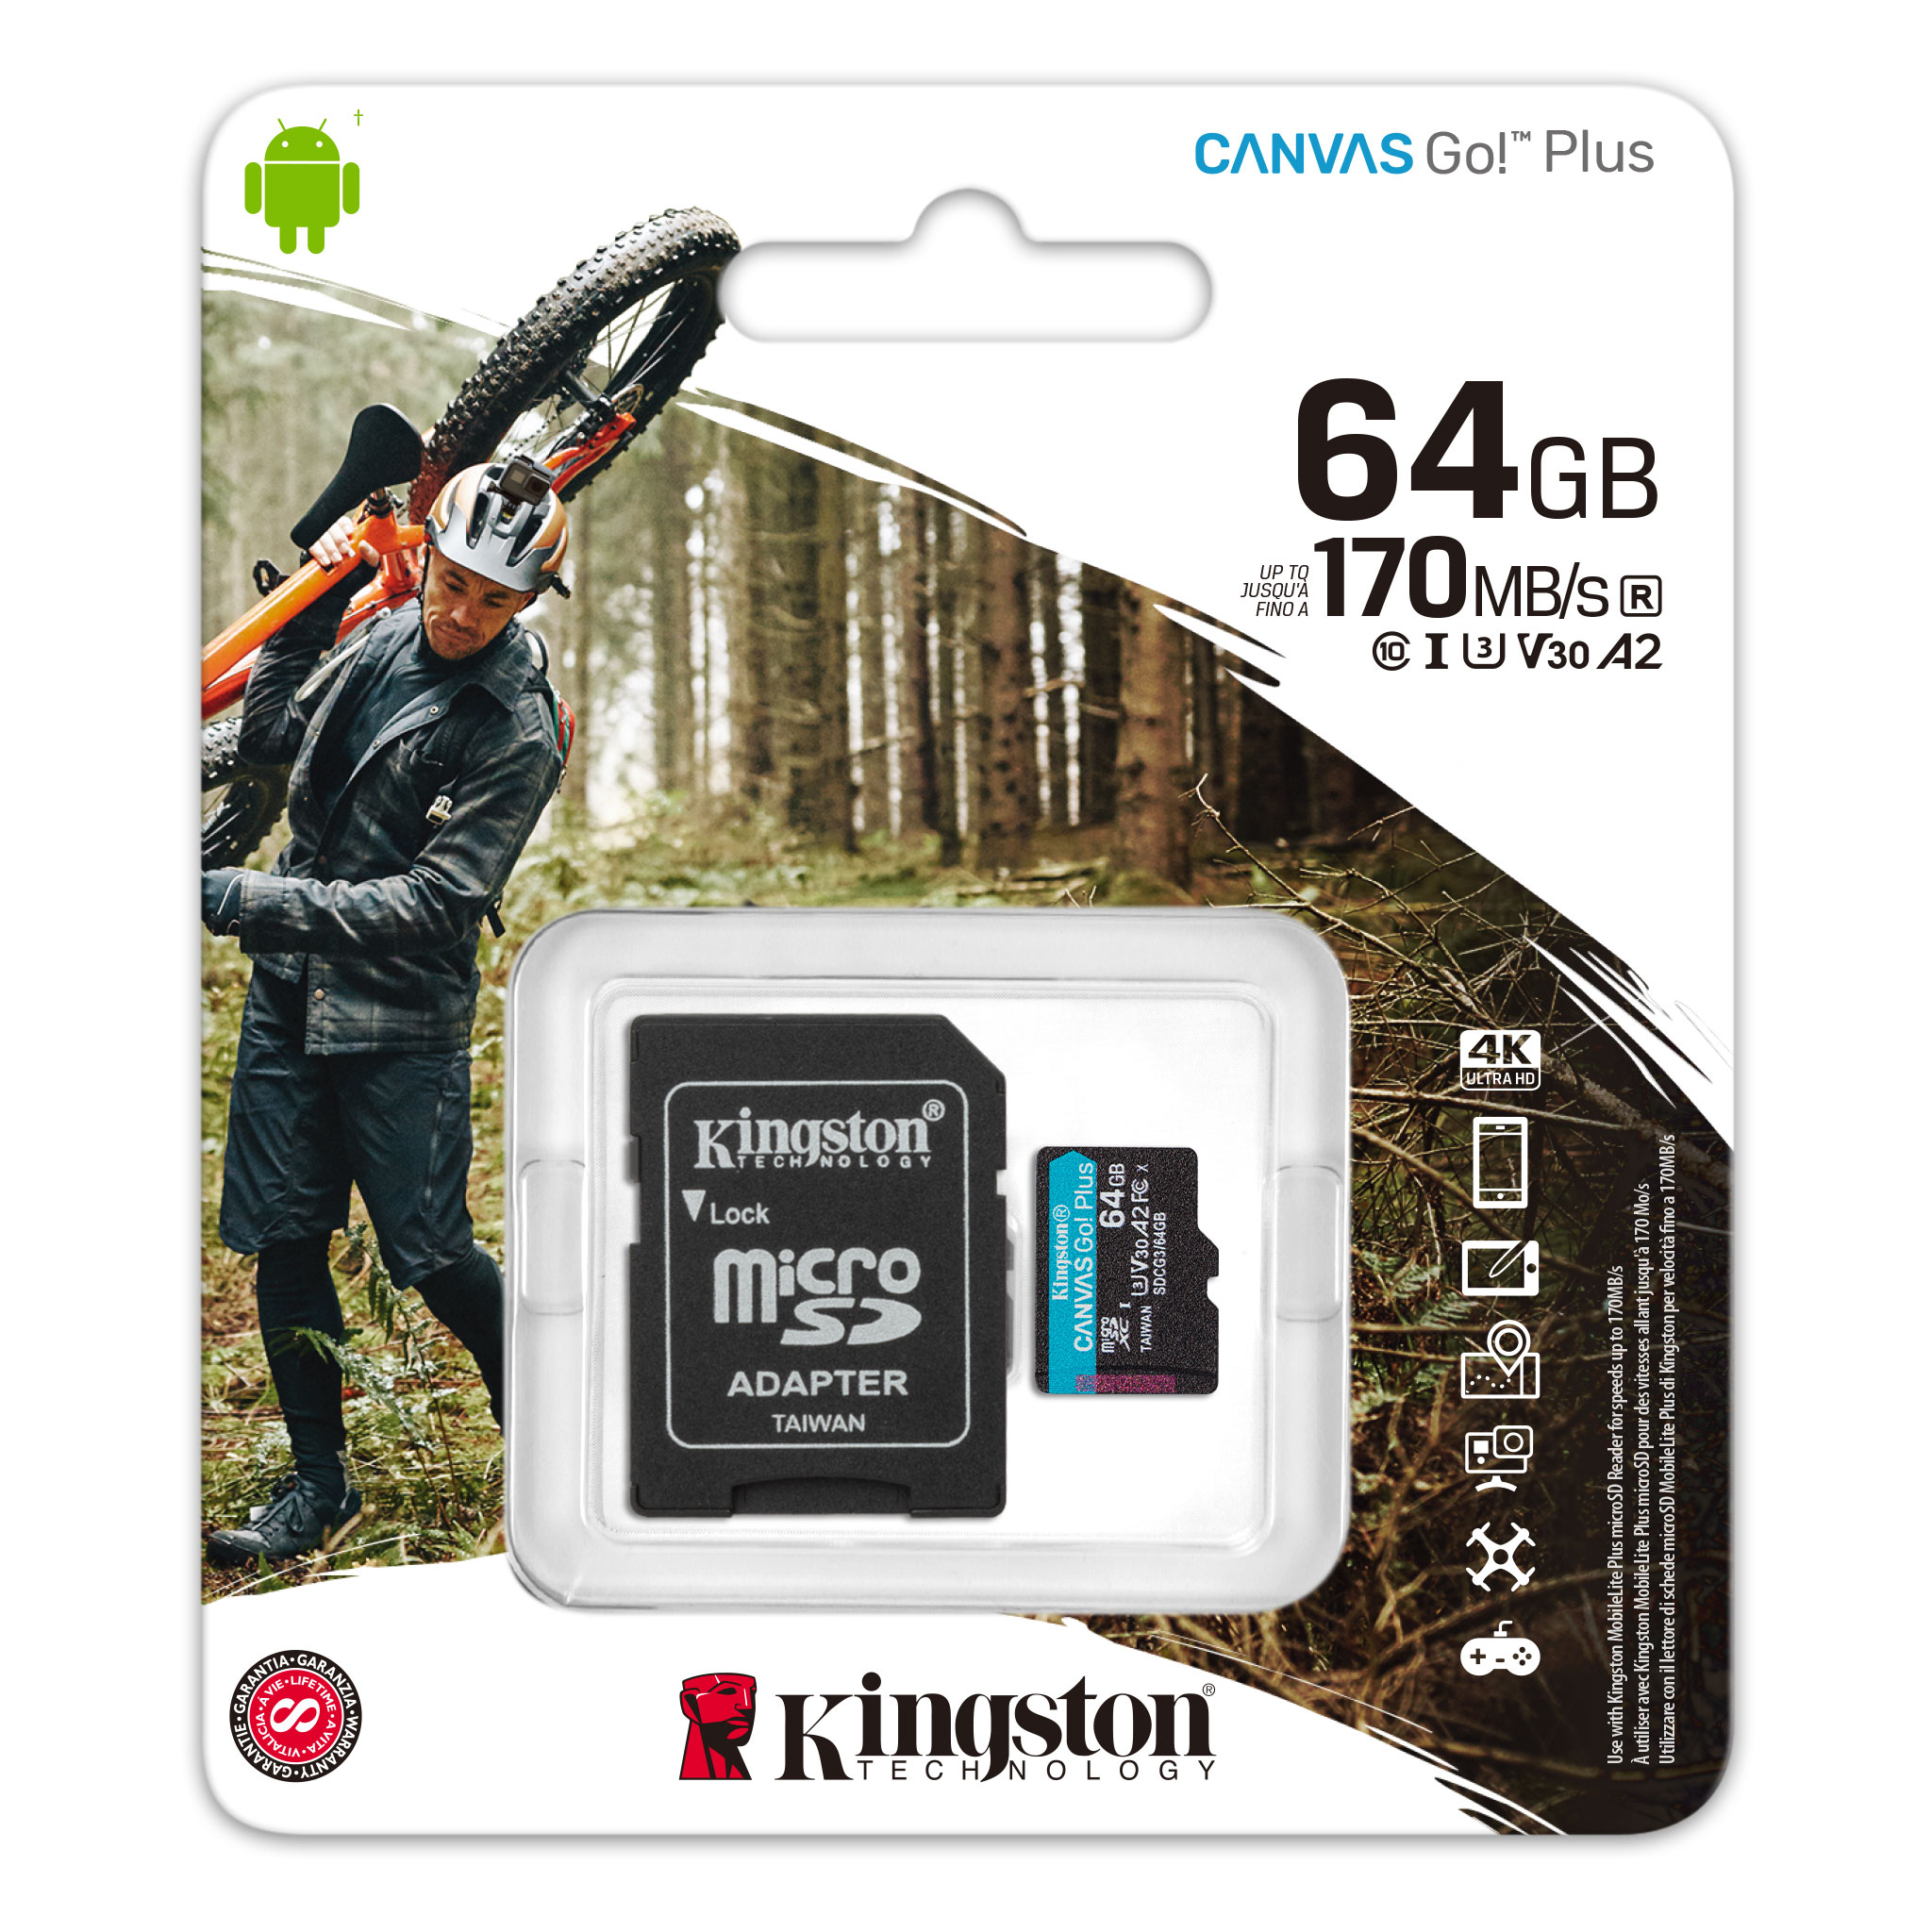 90MBs Works for Kingston Kingston Industrial Grade 8GB LG V521WG MicroSDHC Card Verified by SanFlash. 